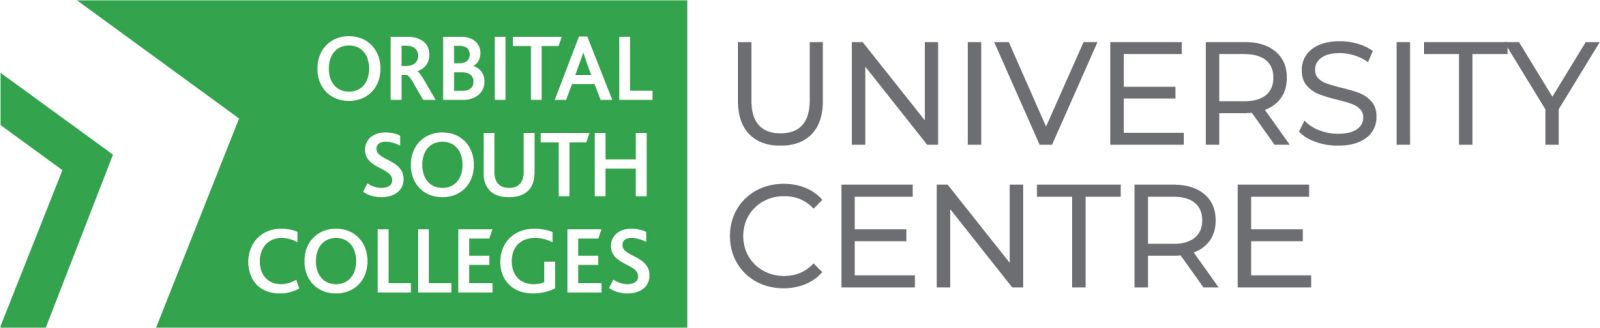 orbital-south-colleges-university-centre-logo